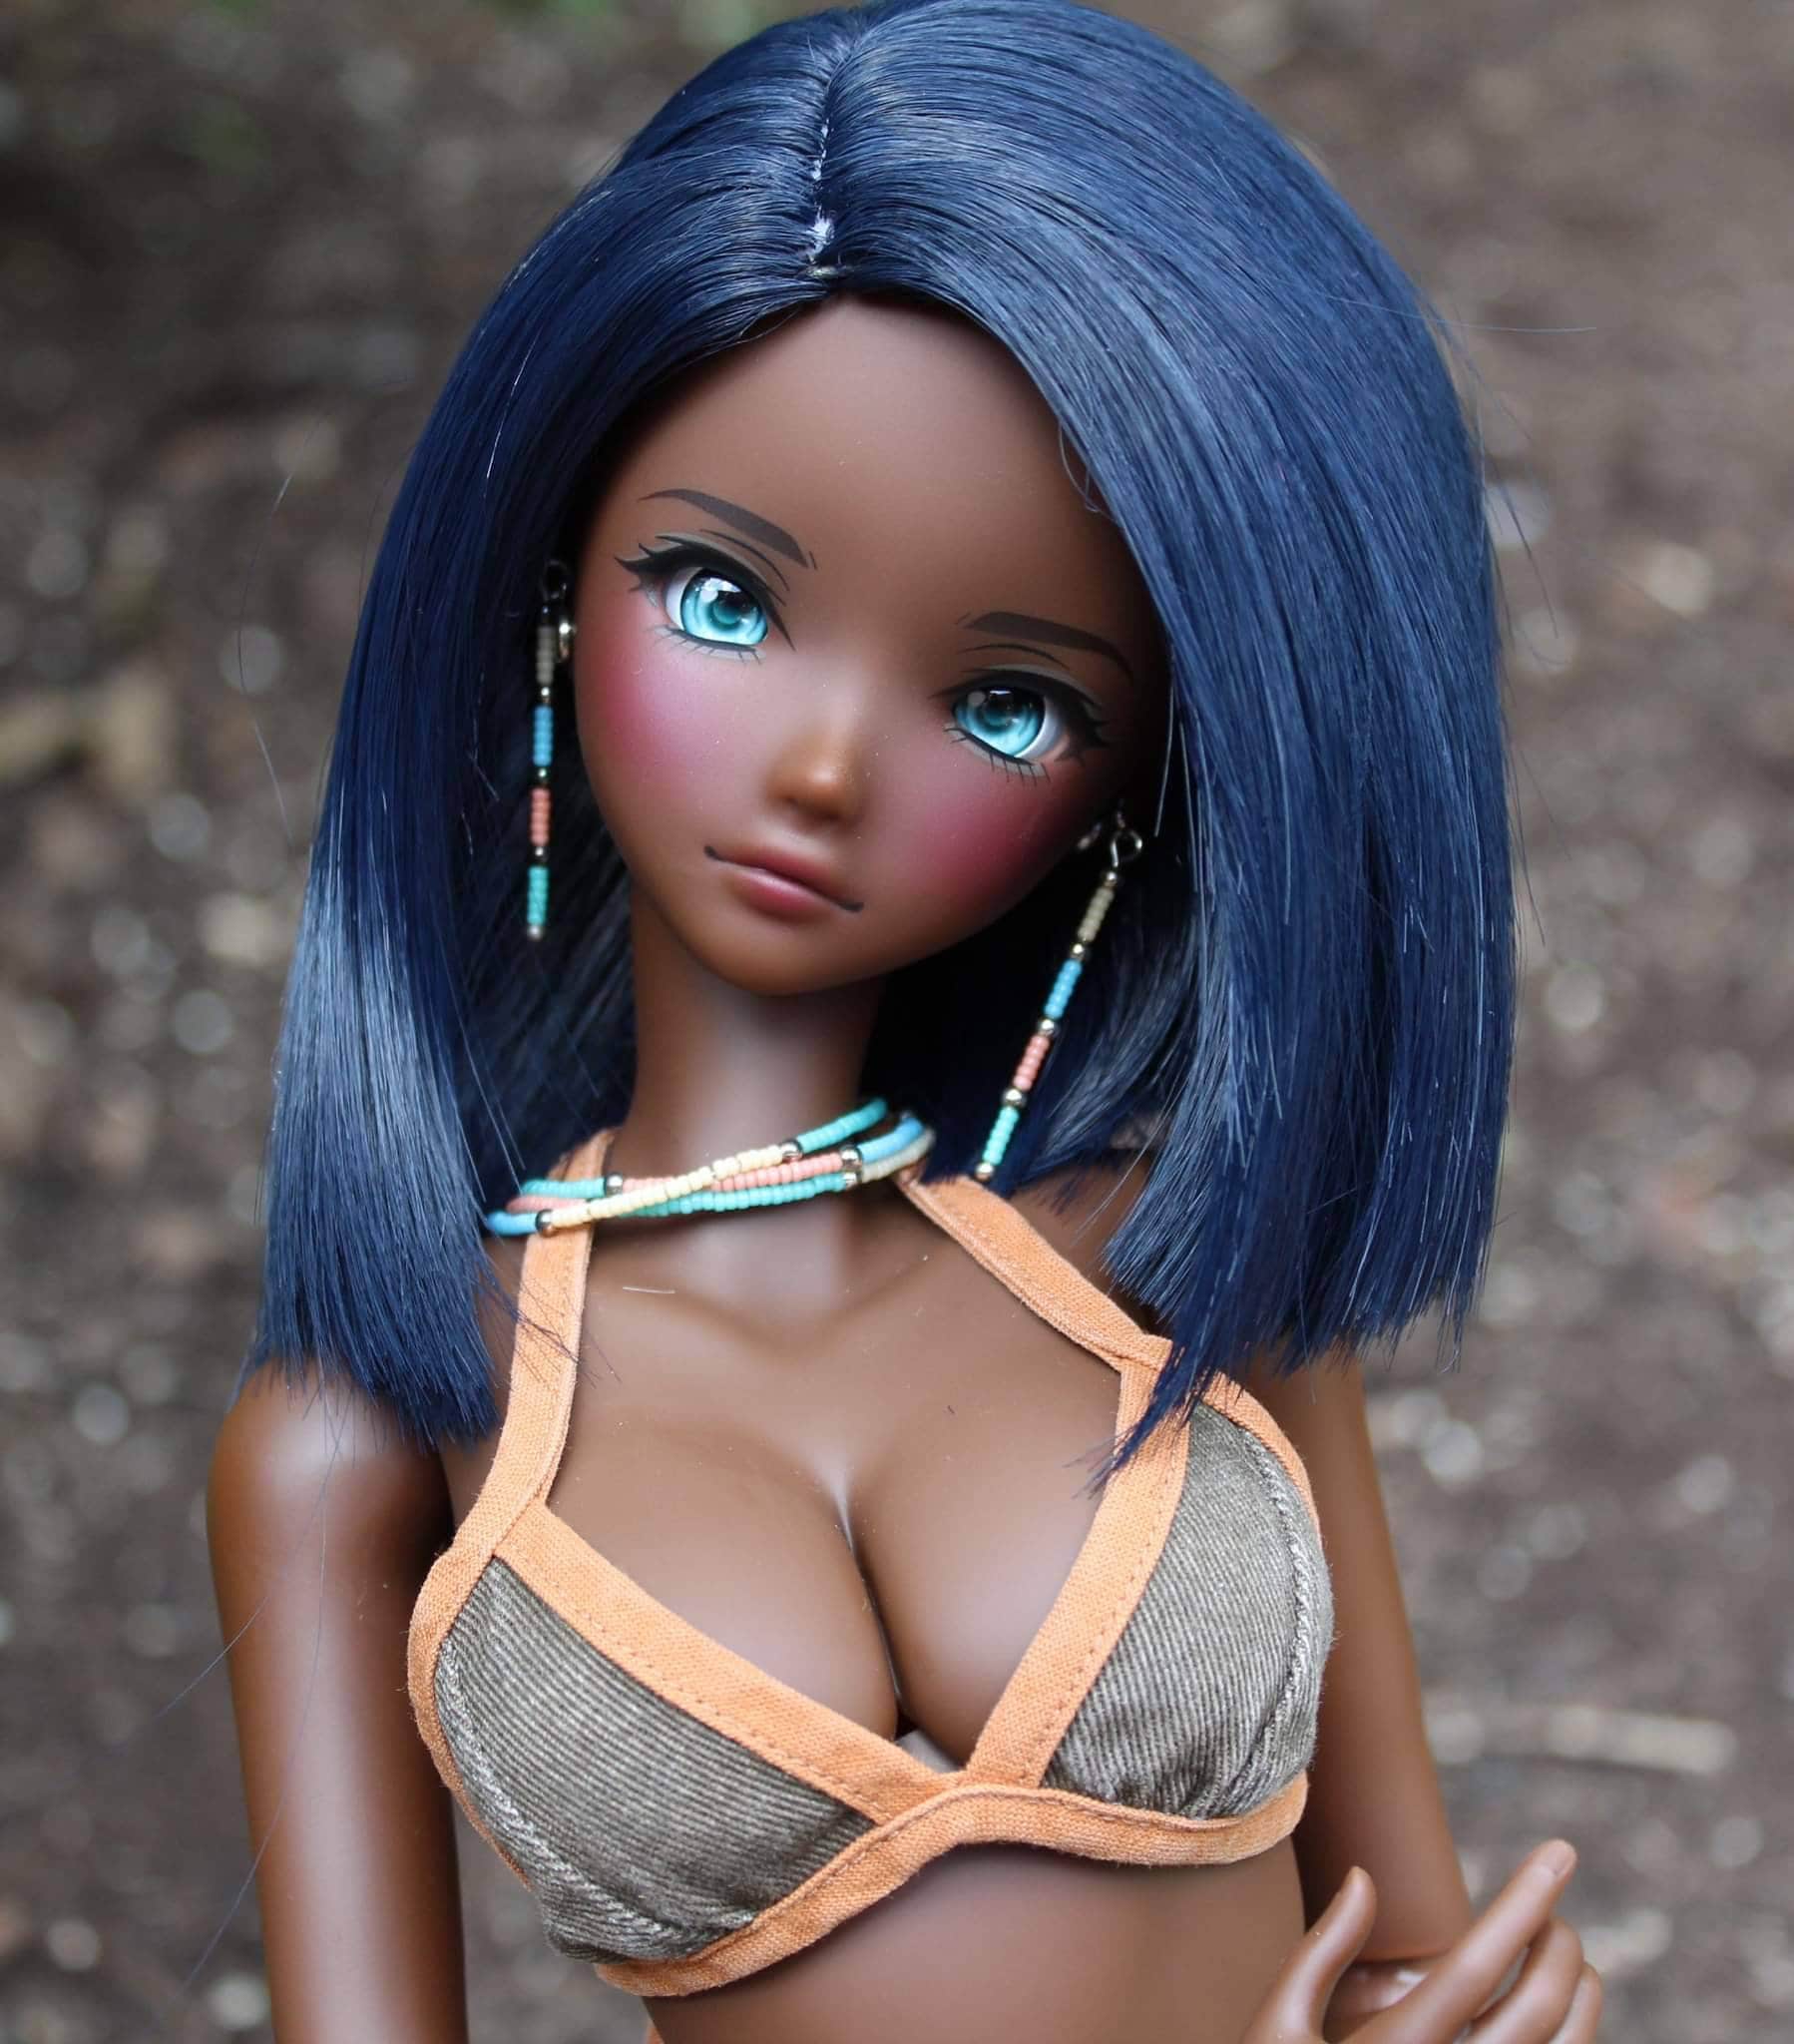 Custom doll Wig for Smart Dolls- Heat Safe - Tangle Resistant- 8.5" head size of Bjd, SD, Dollfie Dream dolls deep blue bob